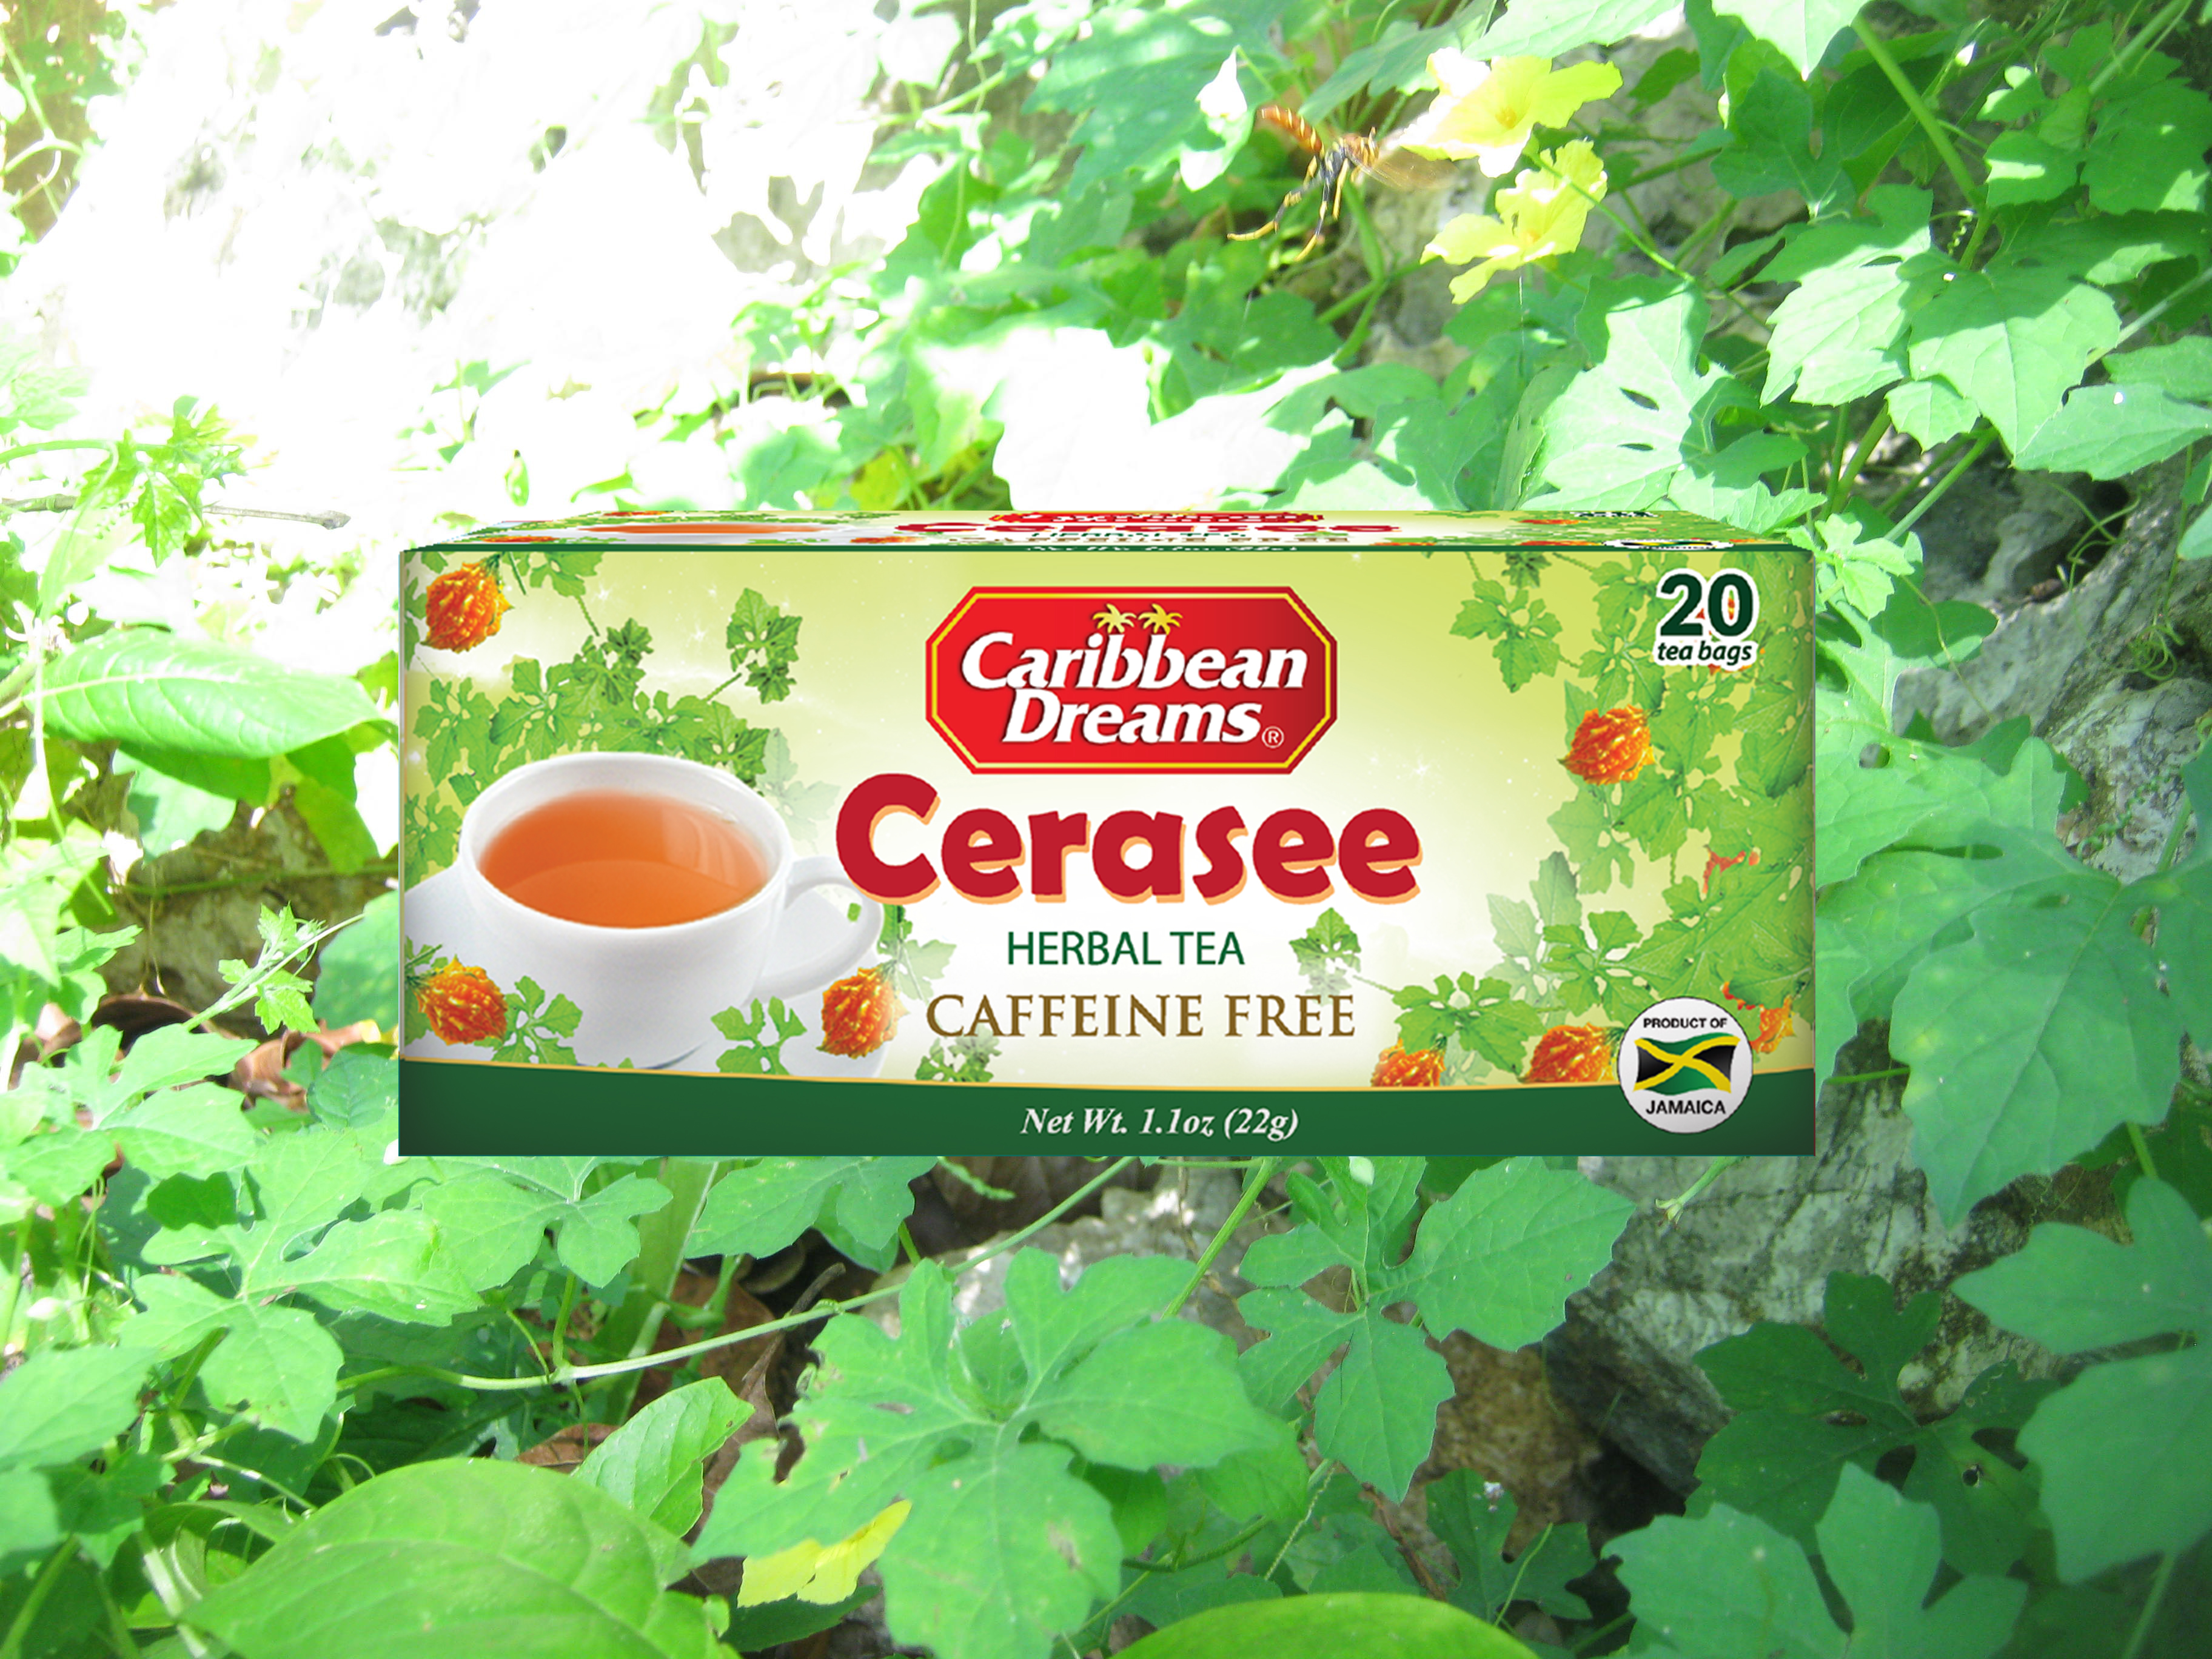 Cerasee in high demand as Jamaican Teas sees sales grow